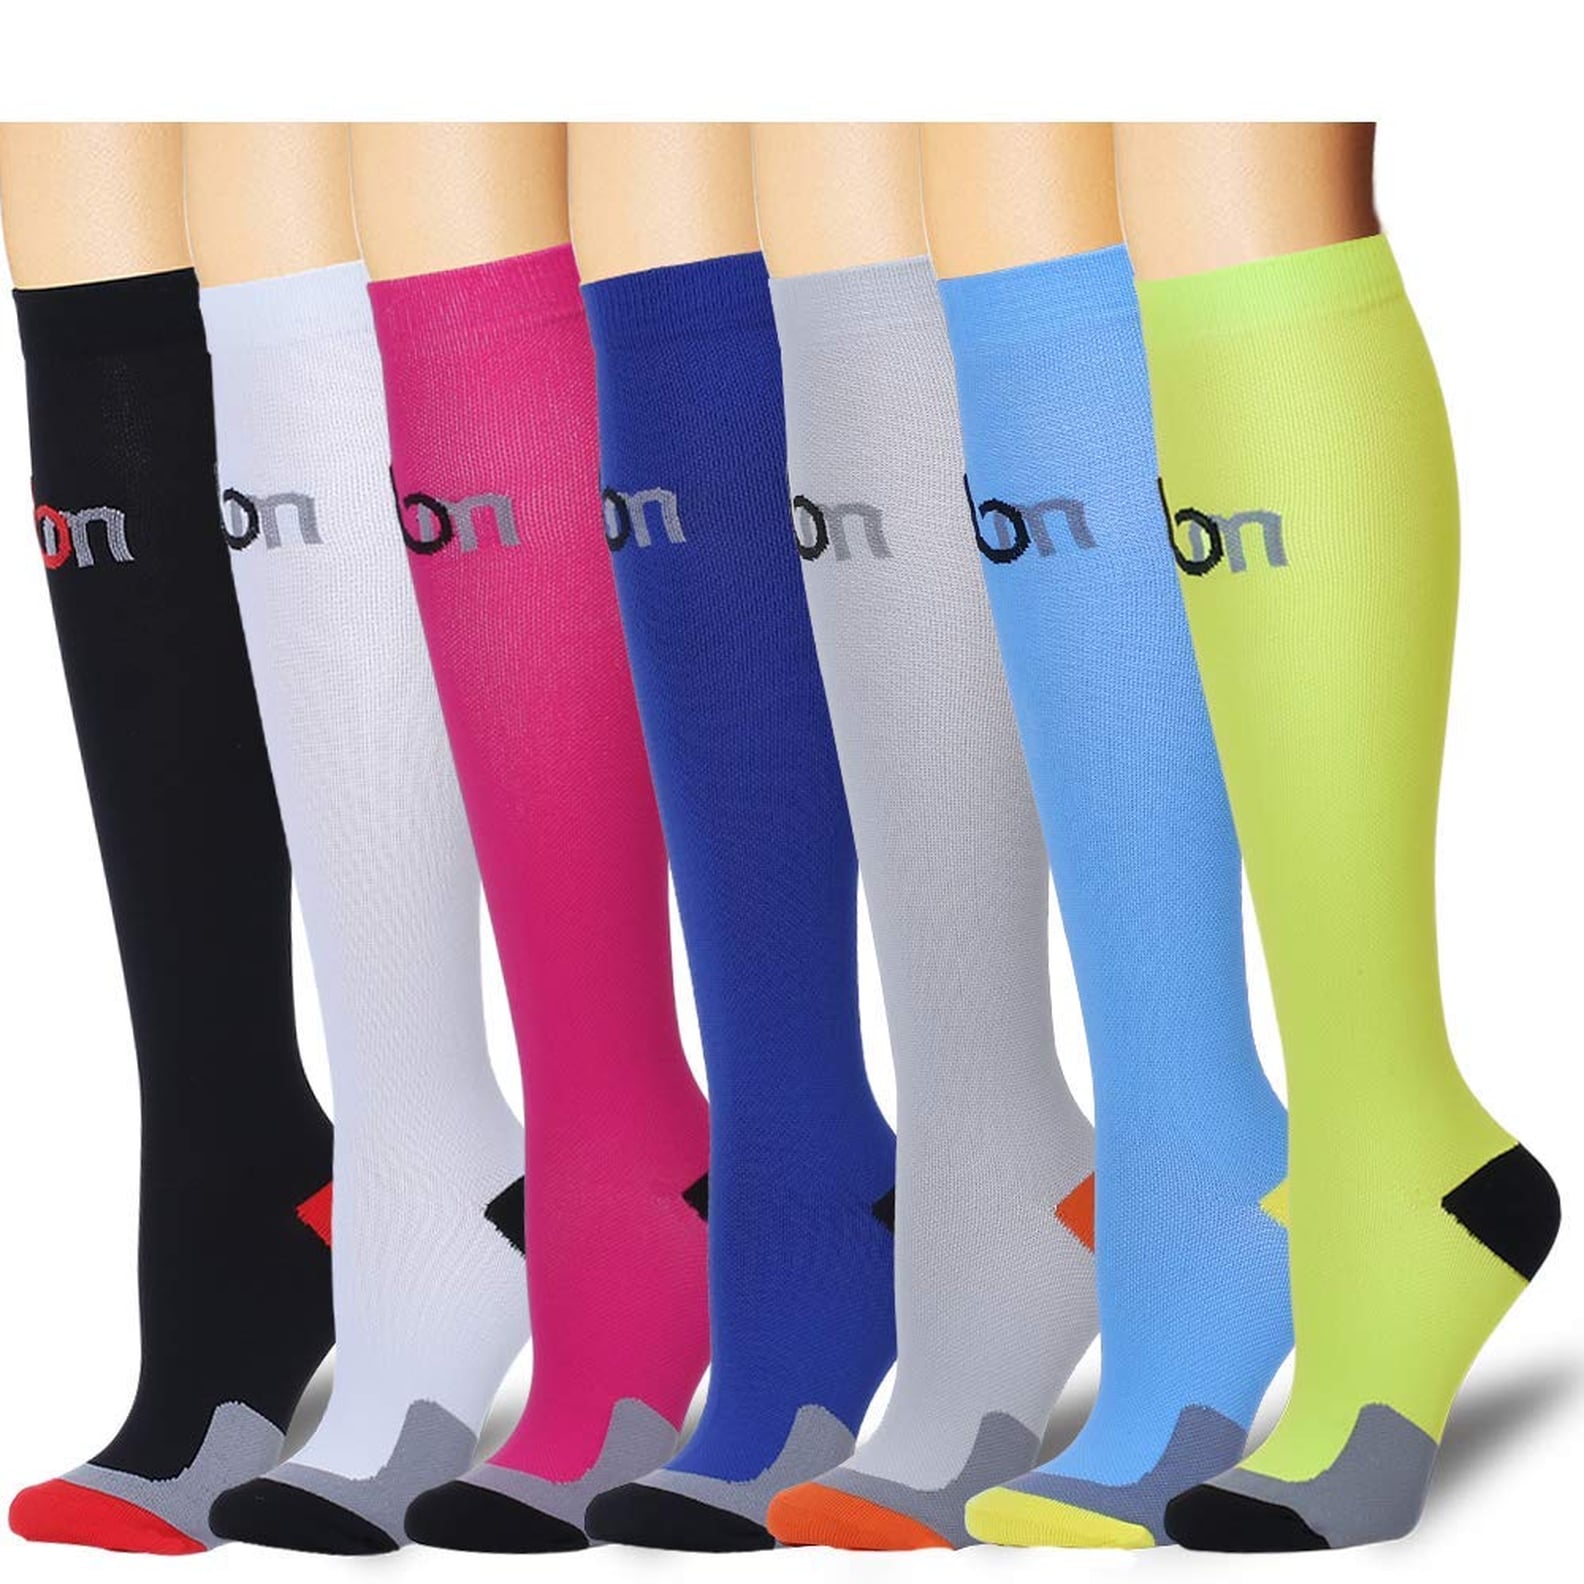 Best Compression Socks For Women on Amazon | POPSUGAR Fitness